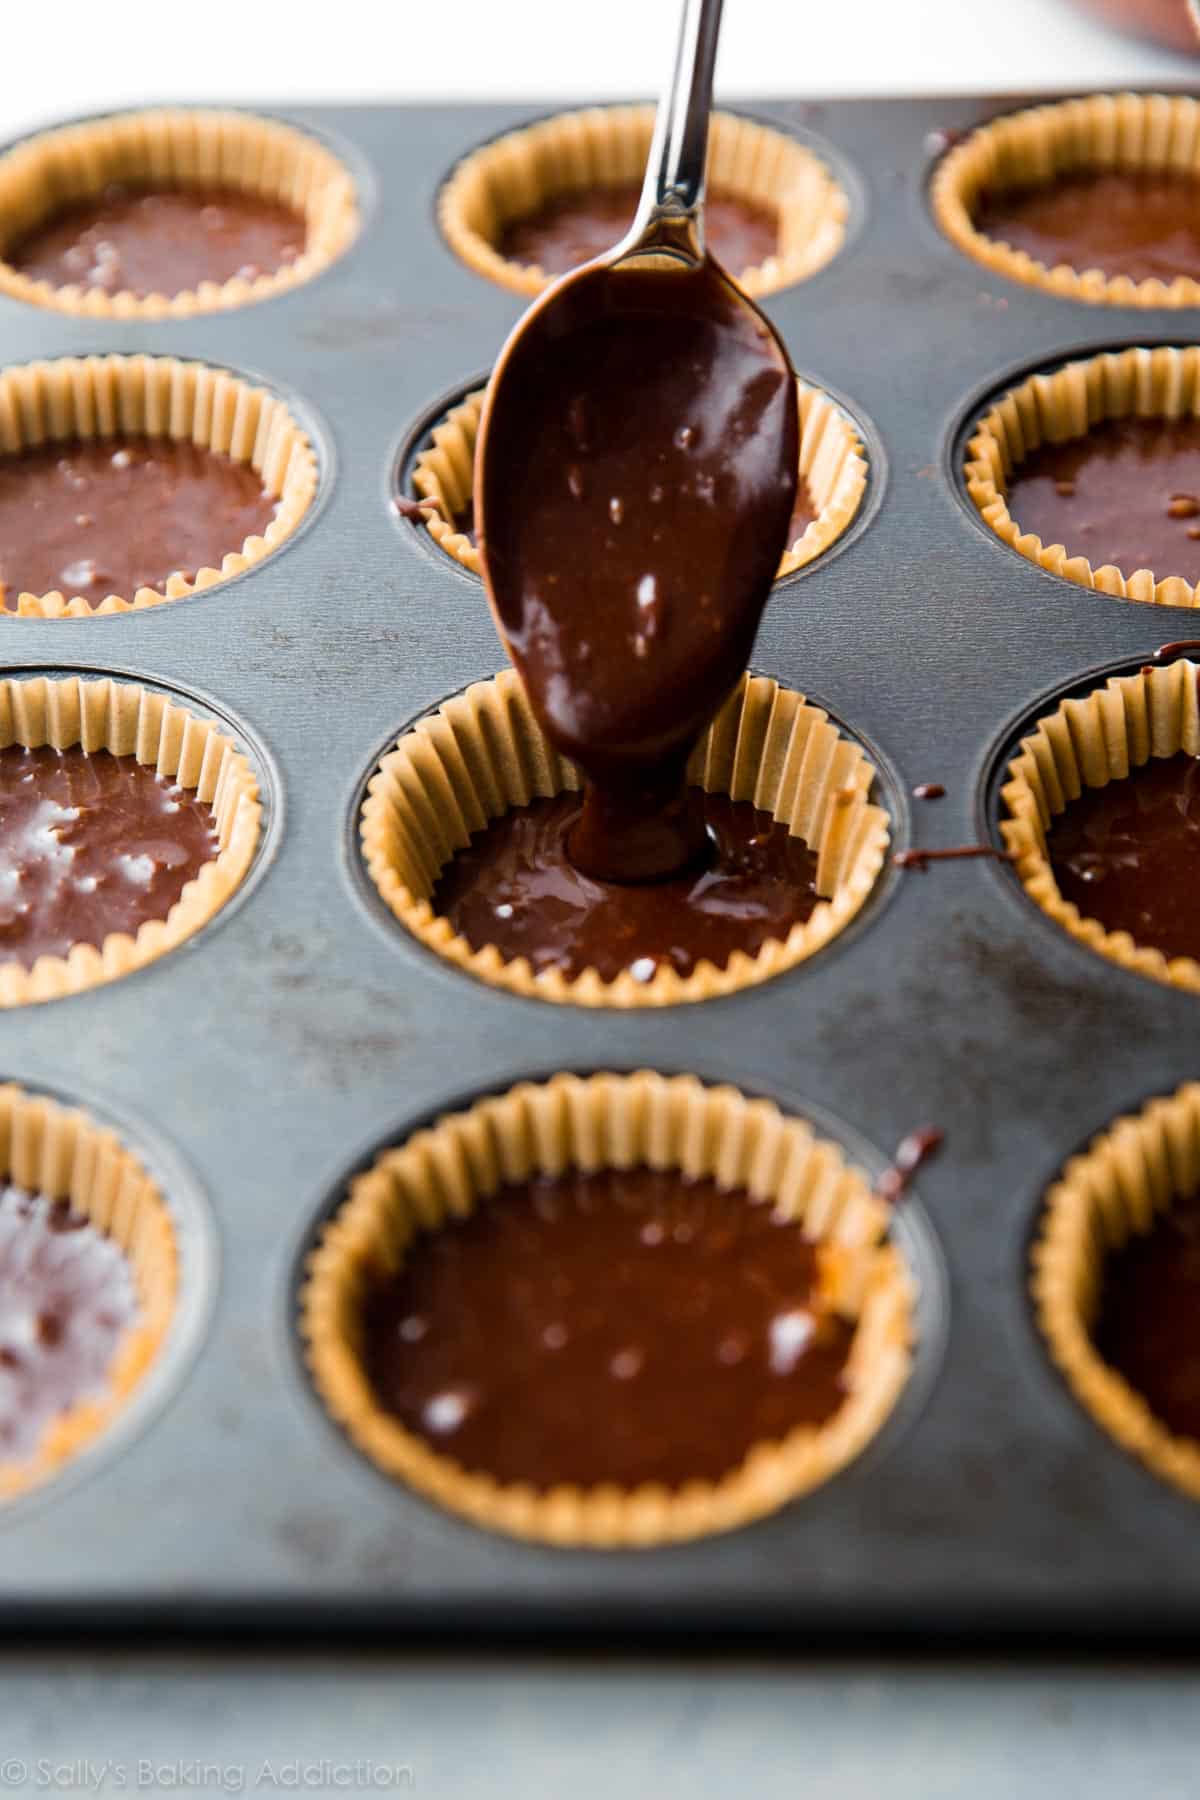 spooning chocolate cupcake batter into a cupcake pan